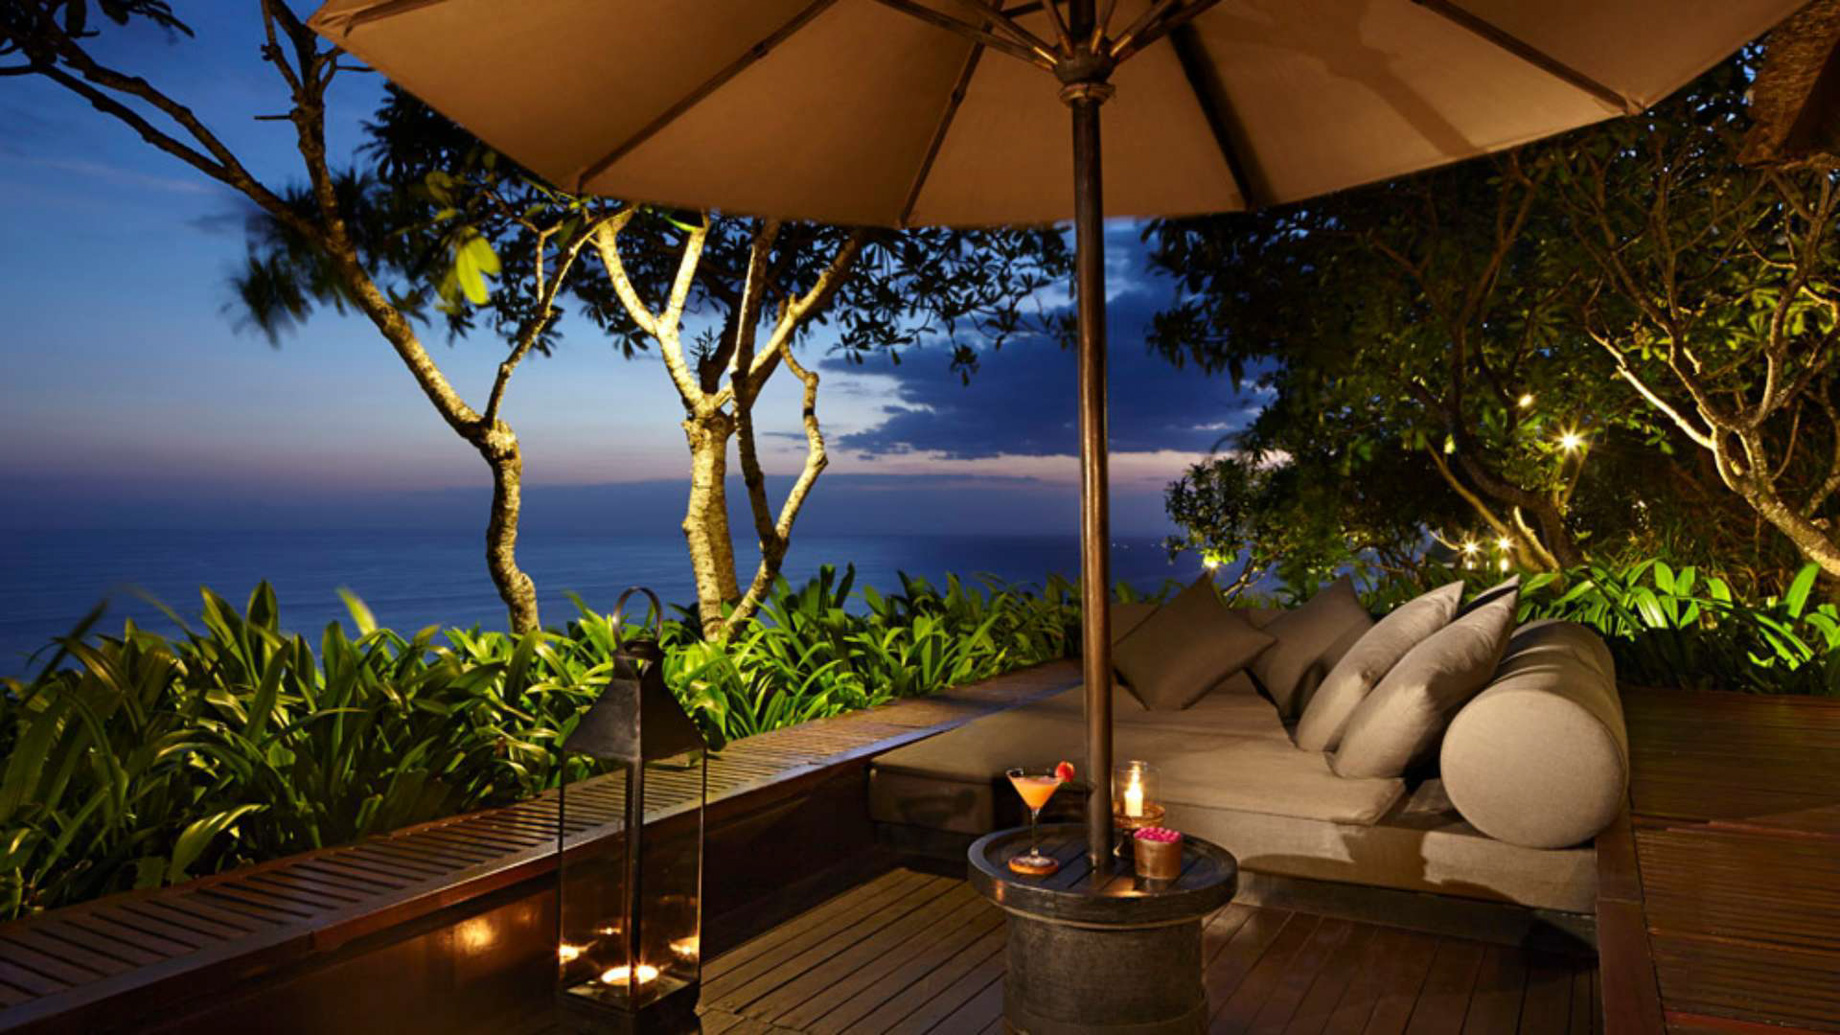 Bvlgari Resort Bali – Uluwatu, Bali, Indonesia – Ocean View Lounge Deck Night